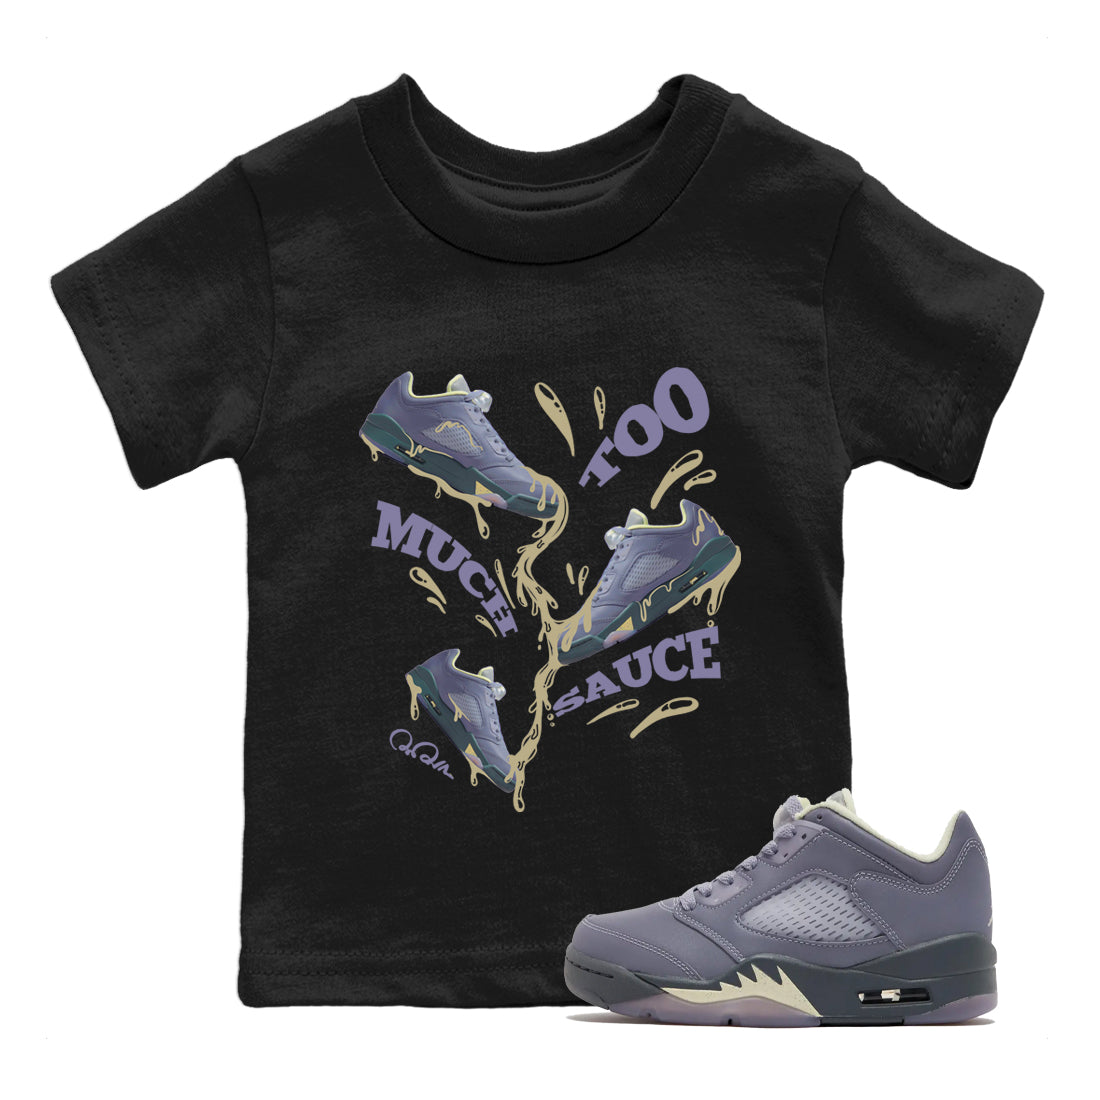 Air Jordan 5 Indigo Haze Sneaker Match Tees Too Much Sauce Sneaker Tees AJ5 Indigo Haze Sneaker Release Tees Kids Shirts Black 1